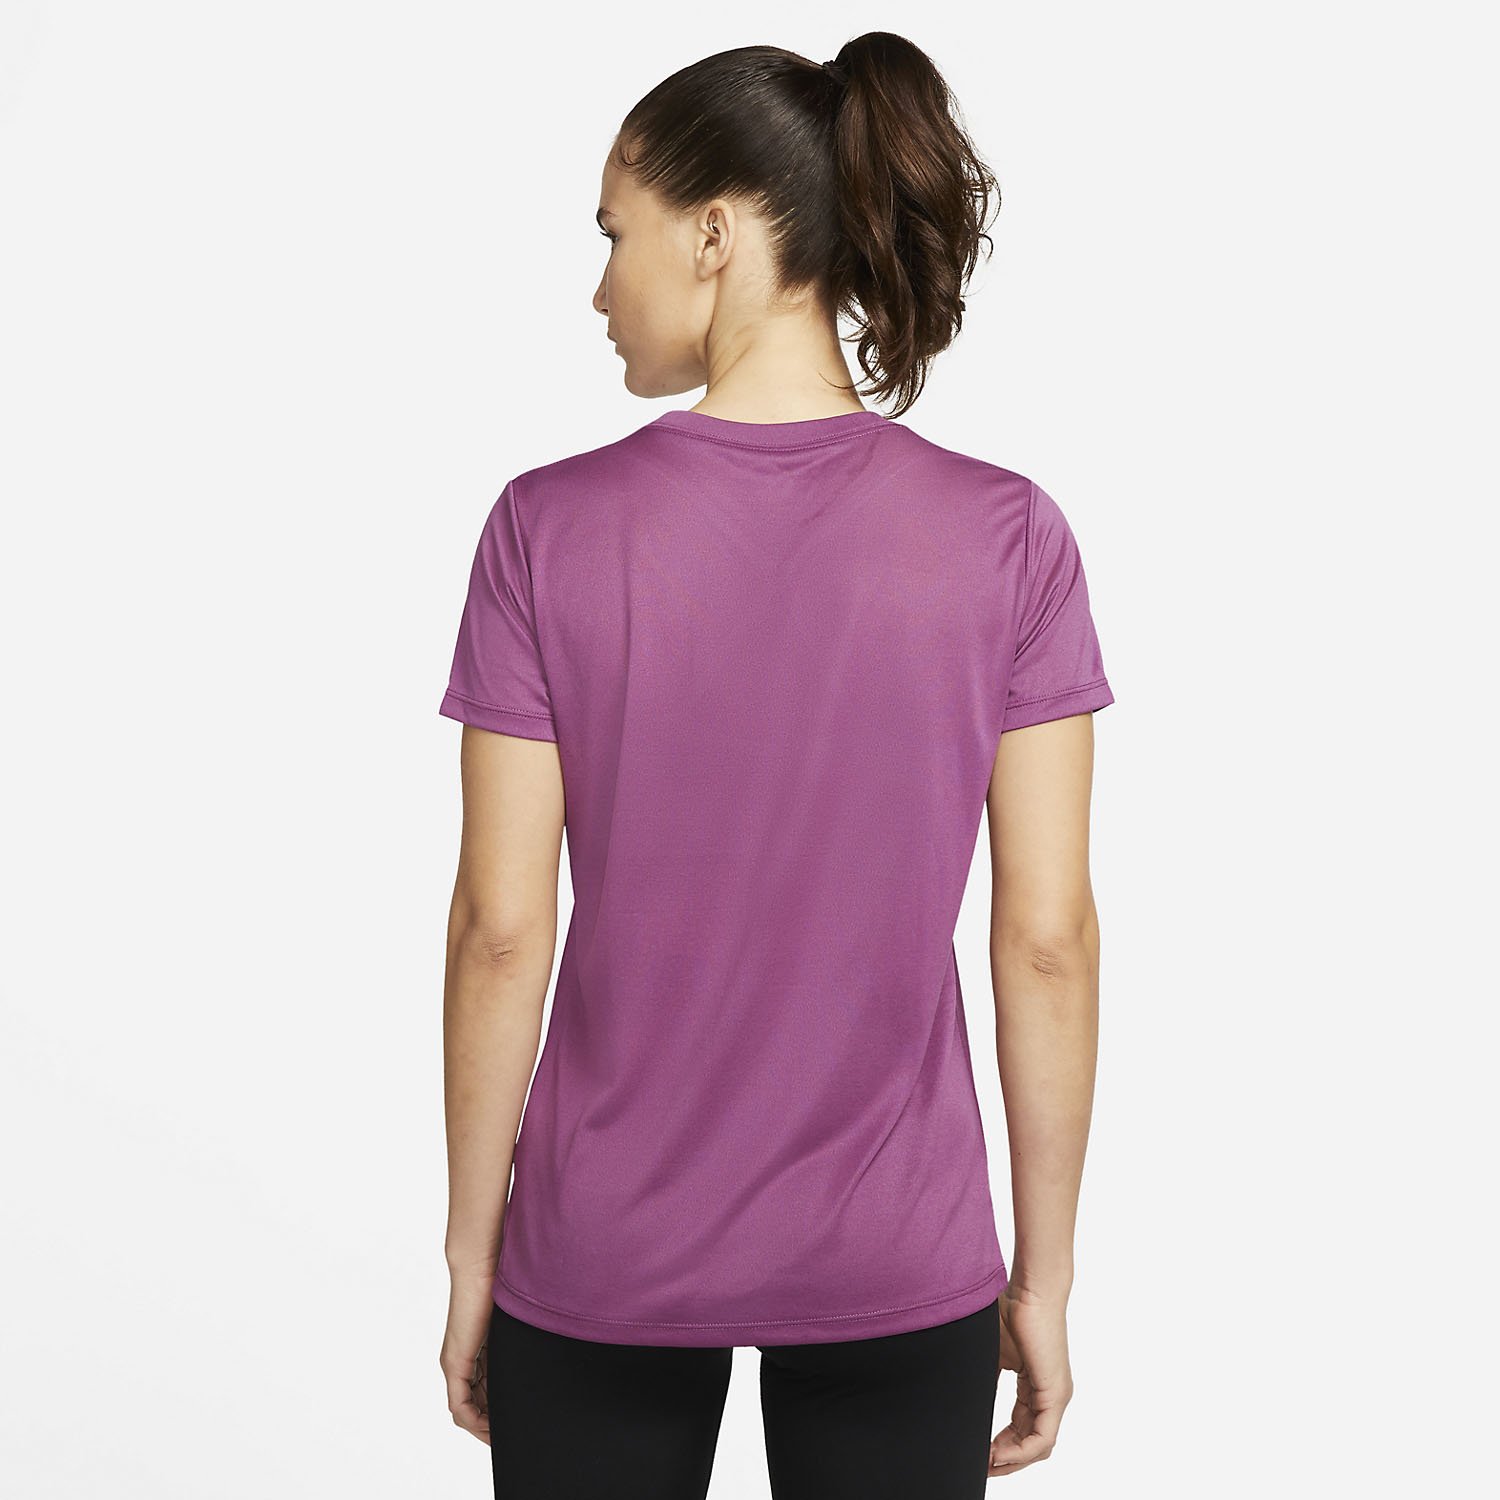 Nike Legend Womens Training T-Shirt - Light Bordeaux/White